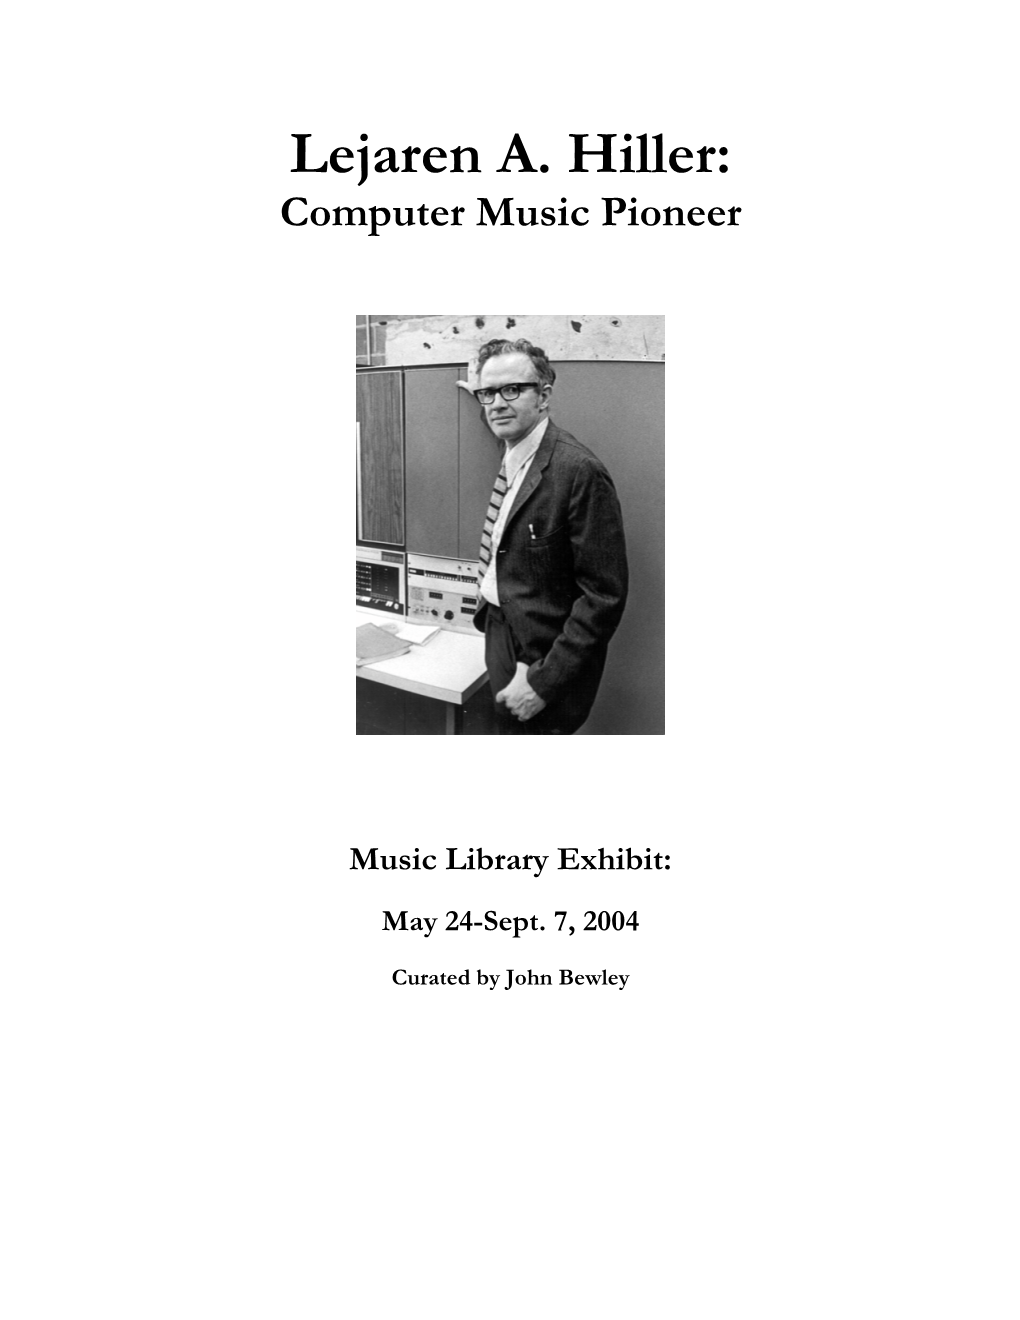 Lejaren A. Hiller: Computer Music Pioneer (PDF)